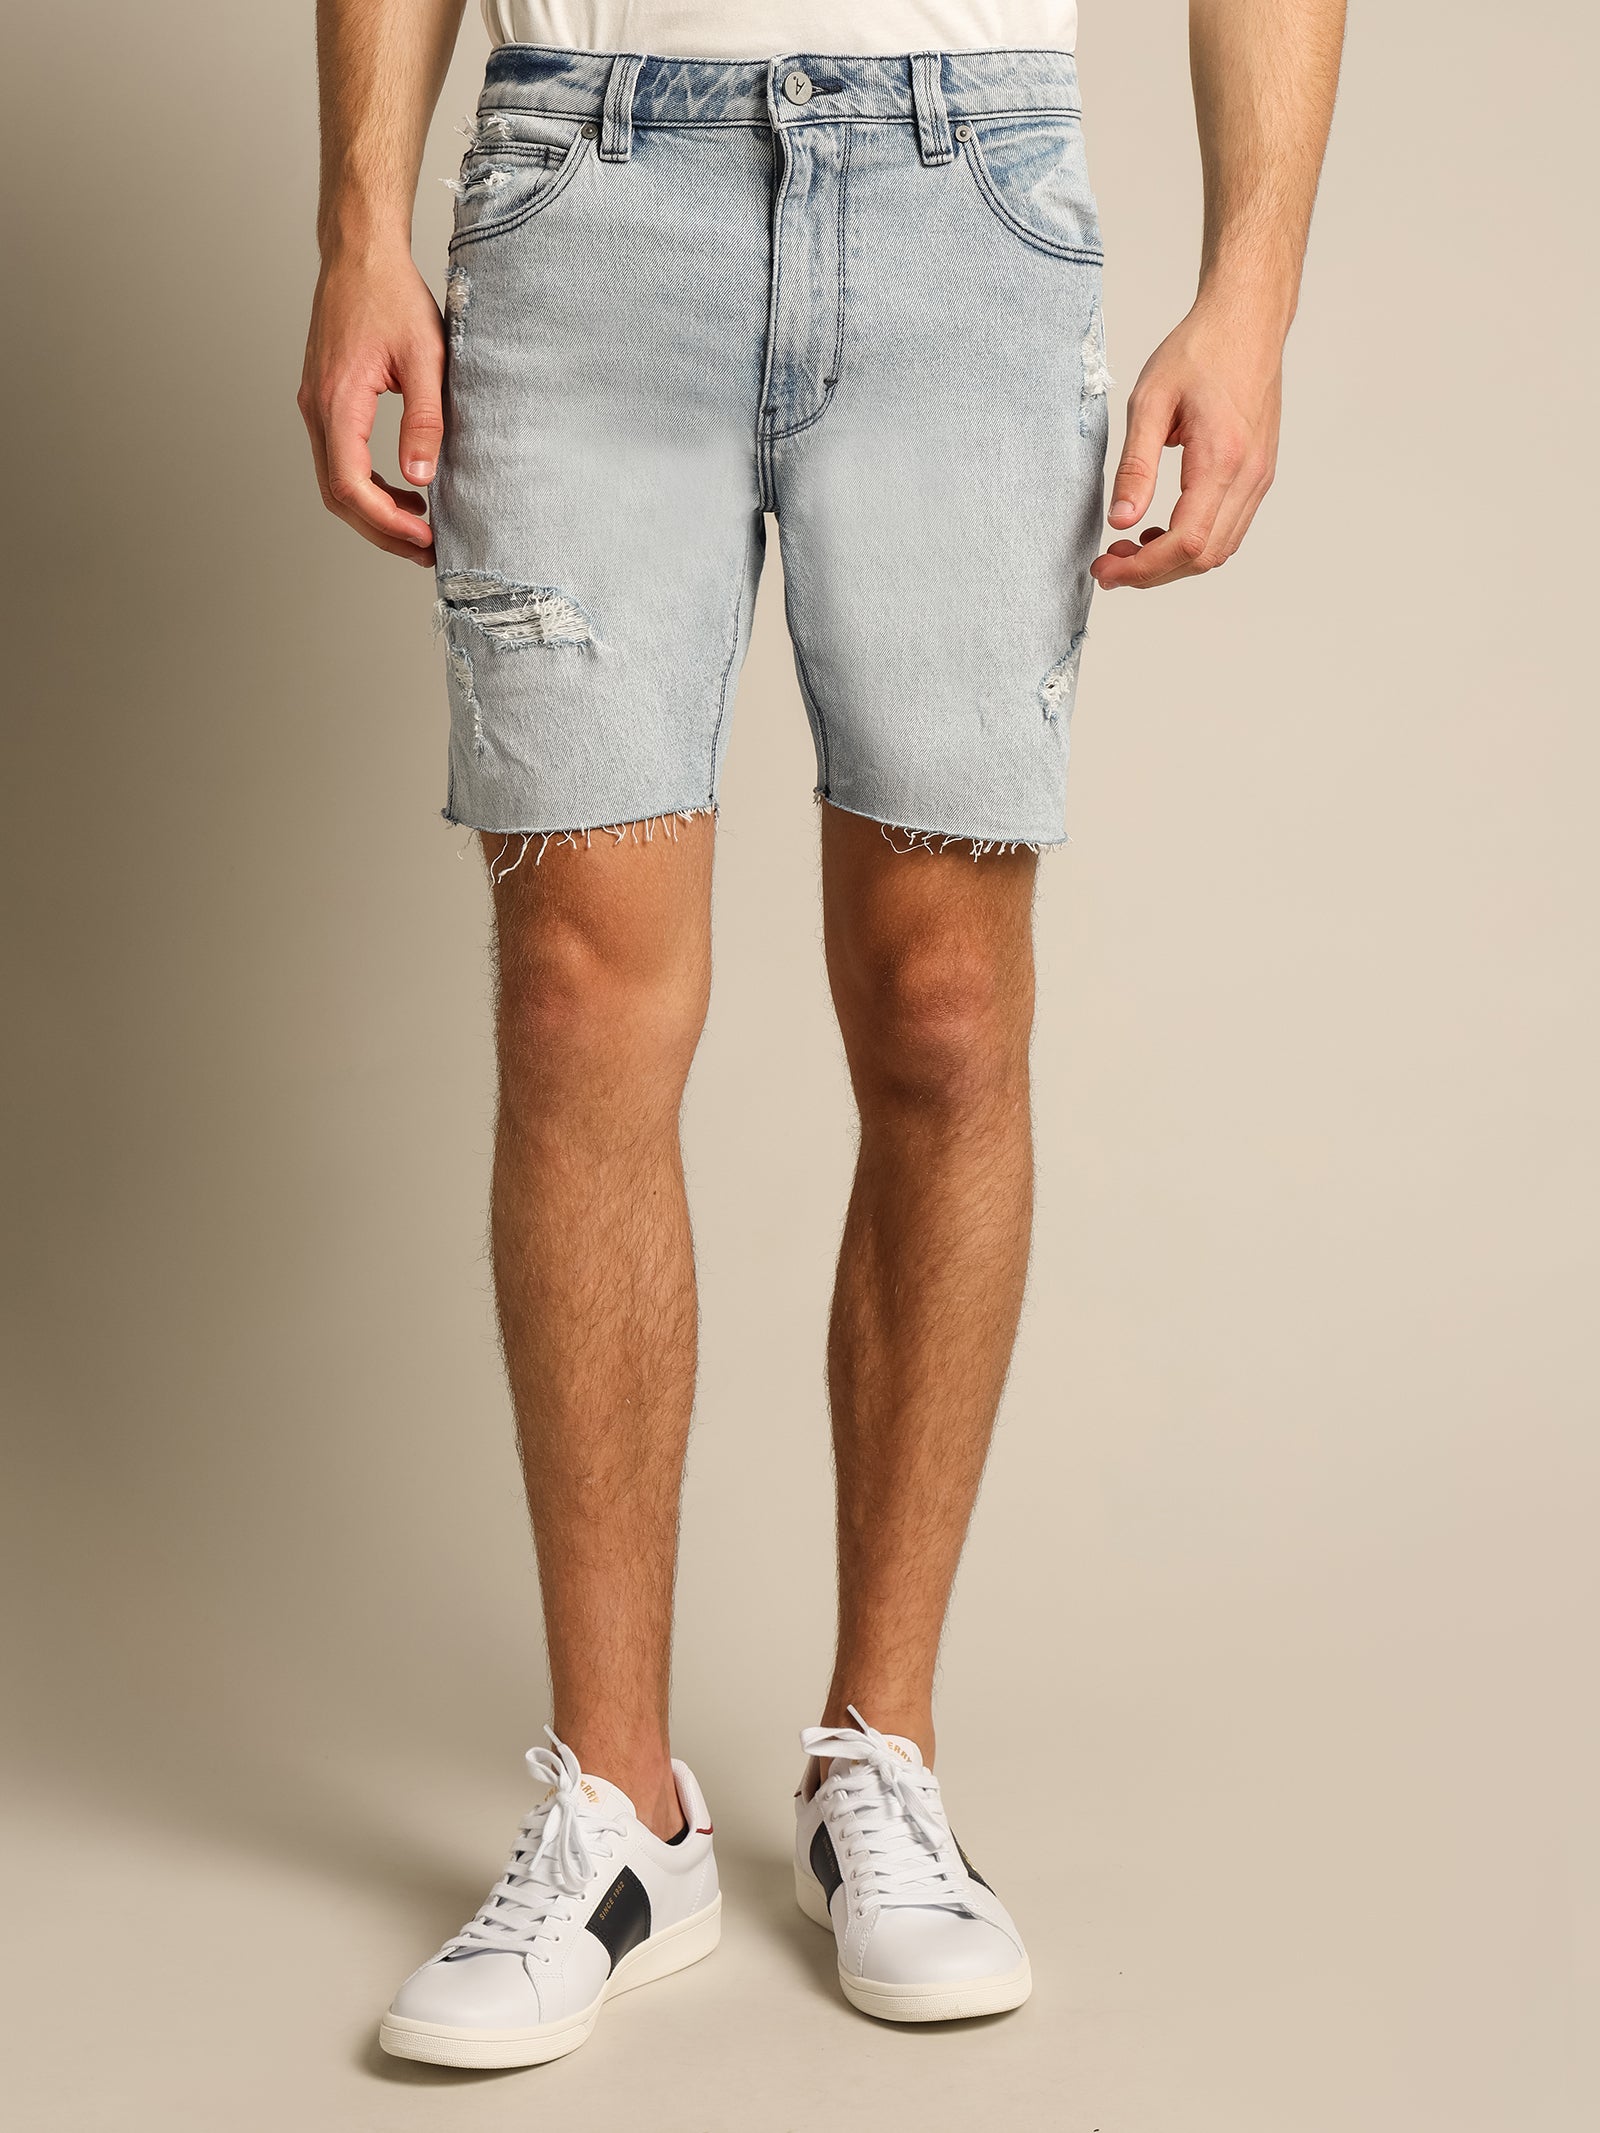 hotsale high quality men denim shorts| Alibaba.com